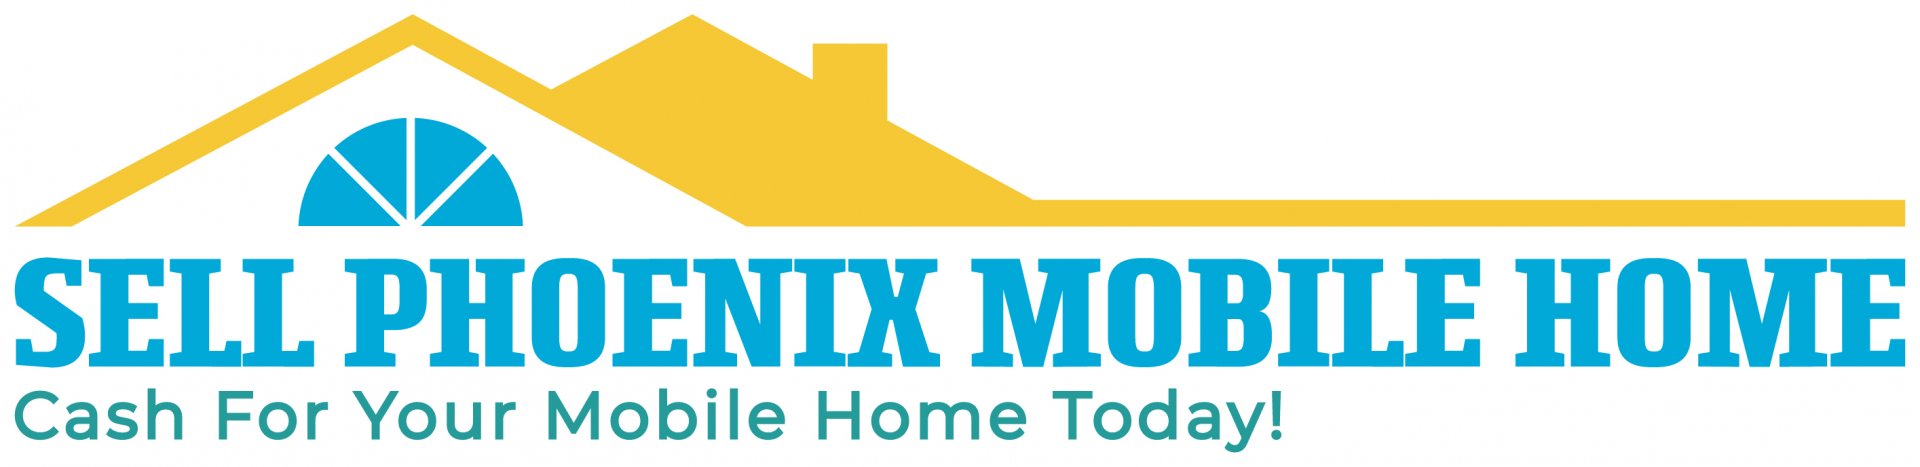 Phoenix Mobile Home Buyers logo